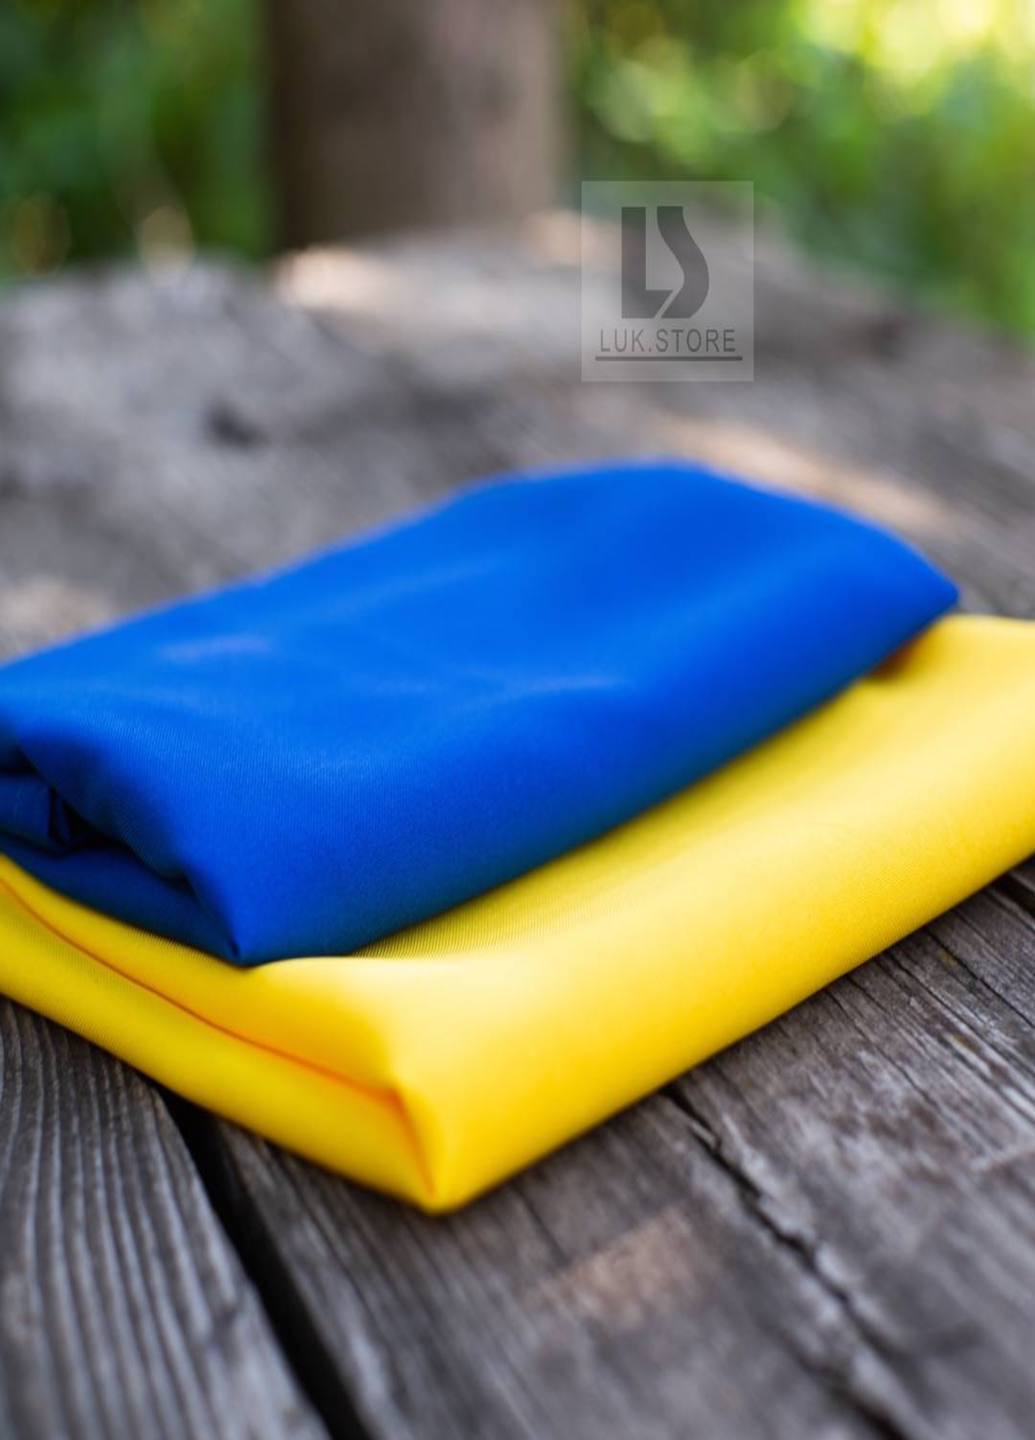 Государственный уличный флаг Украины габардин с карманом под флагшток KARMA (260766332)